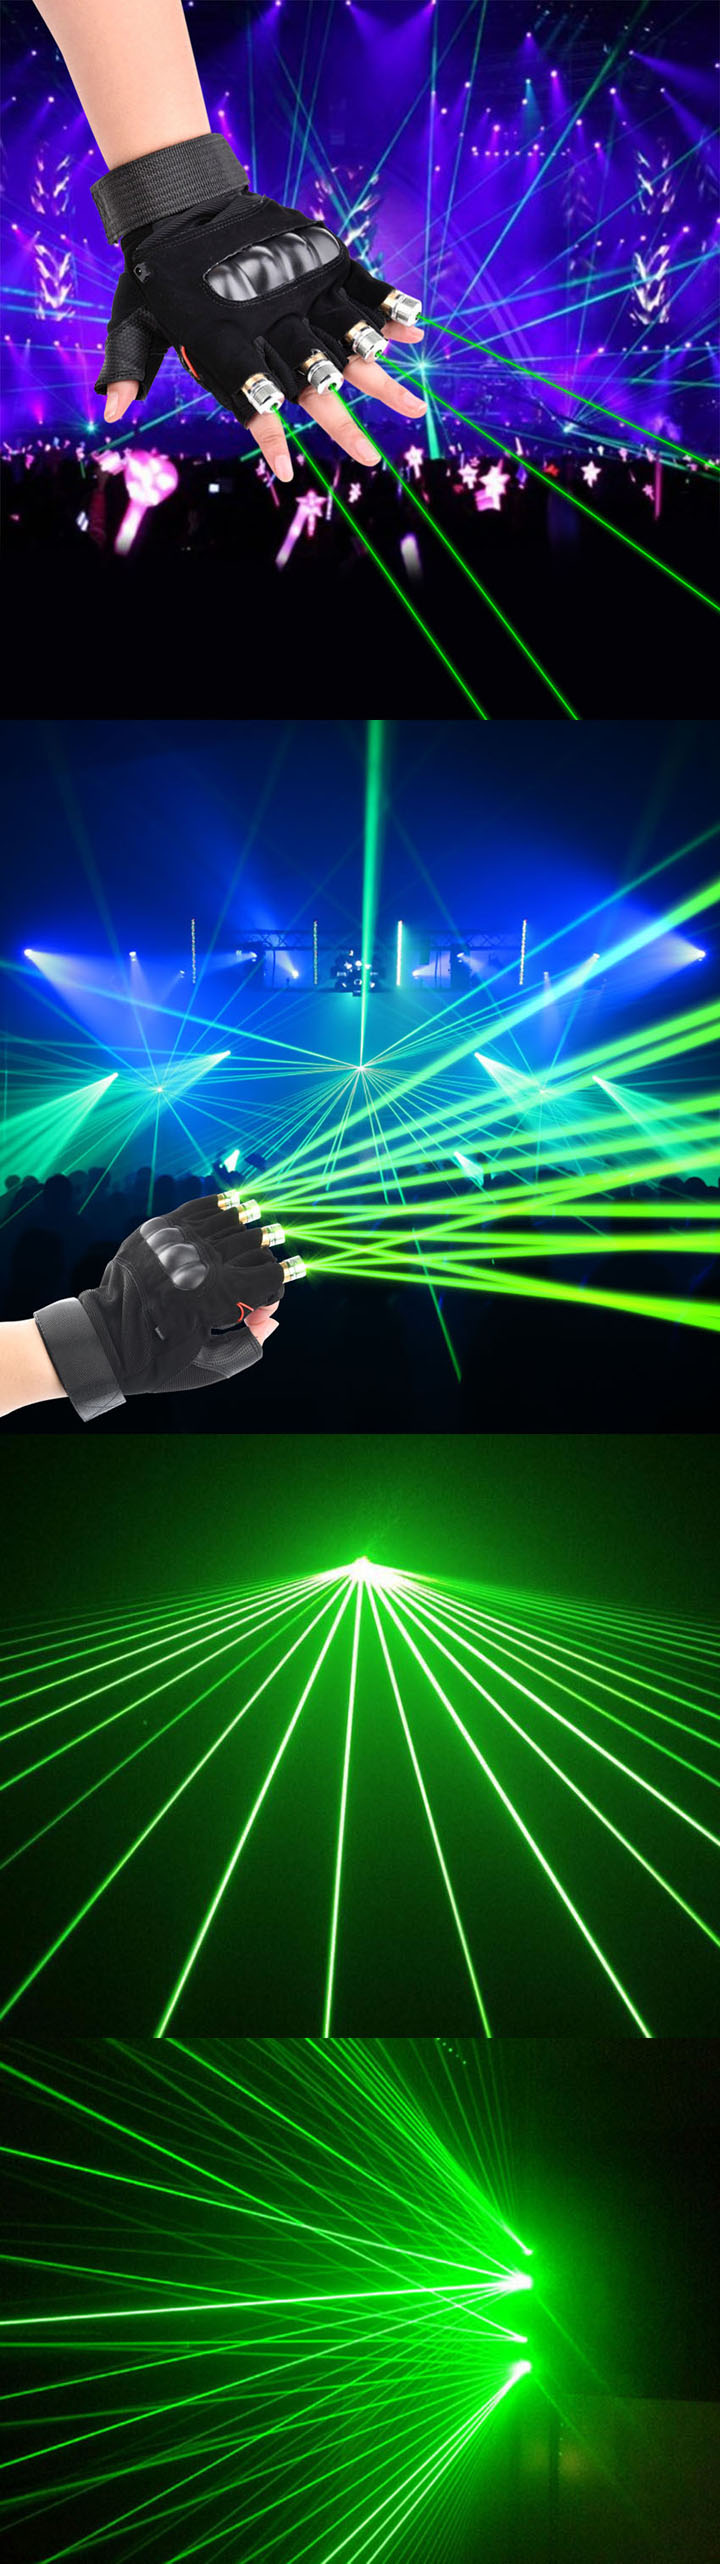 groene laserhandschoenen